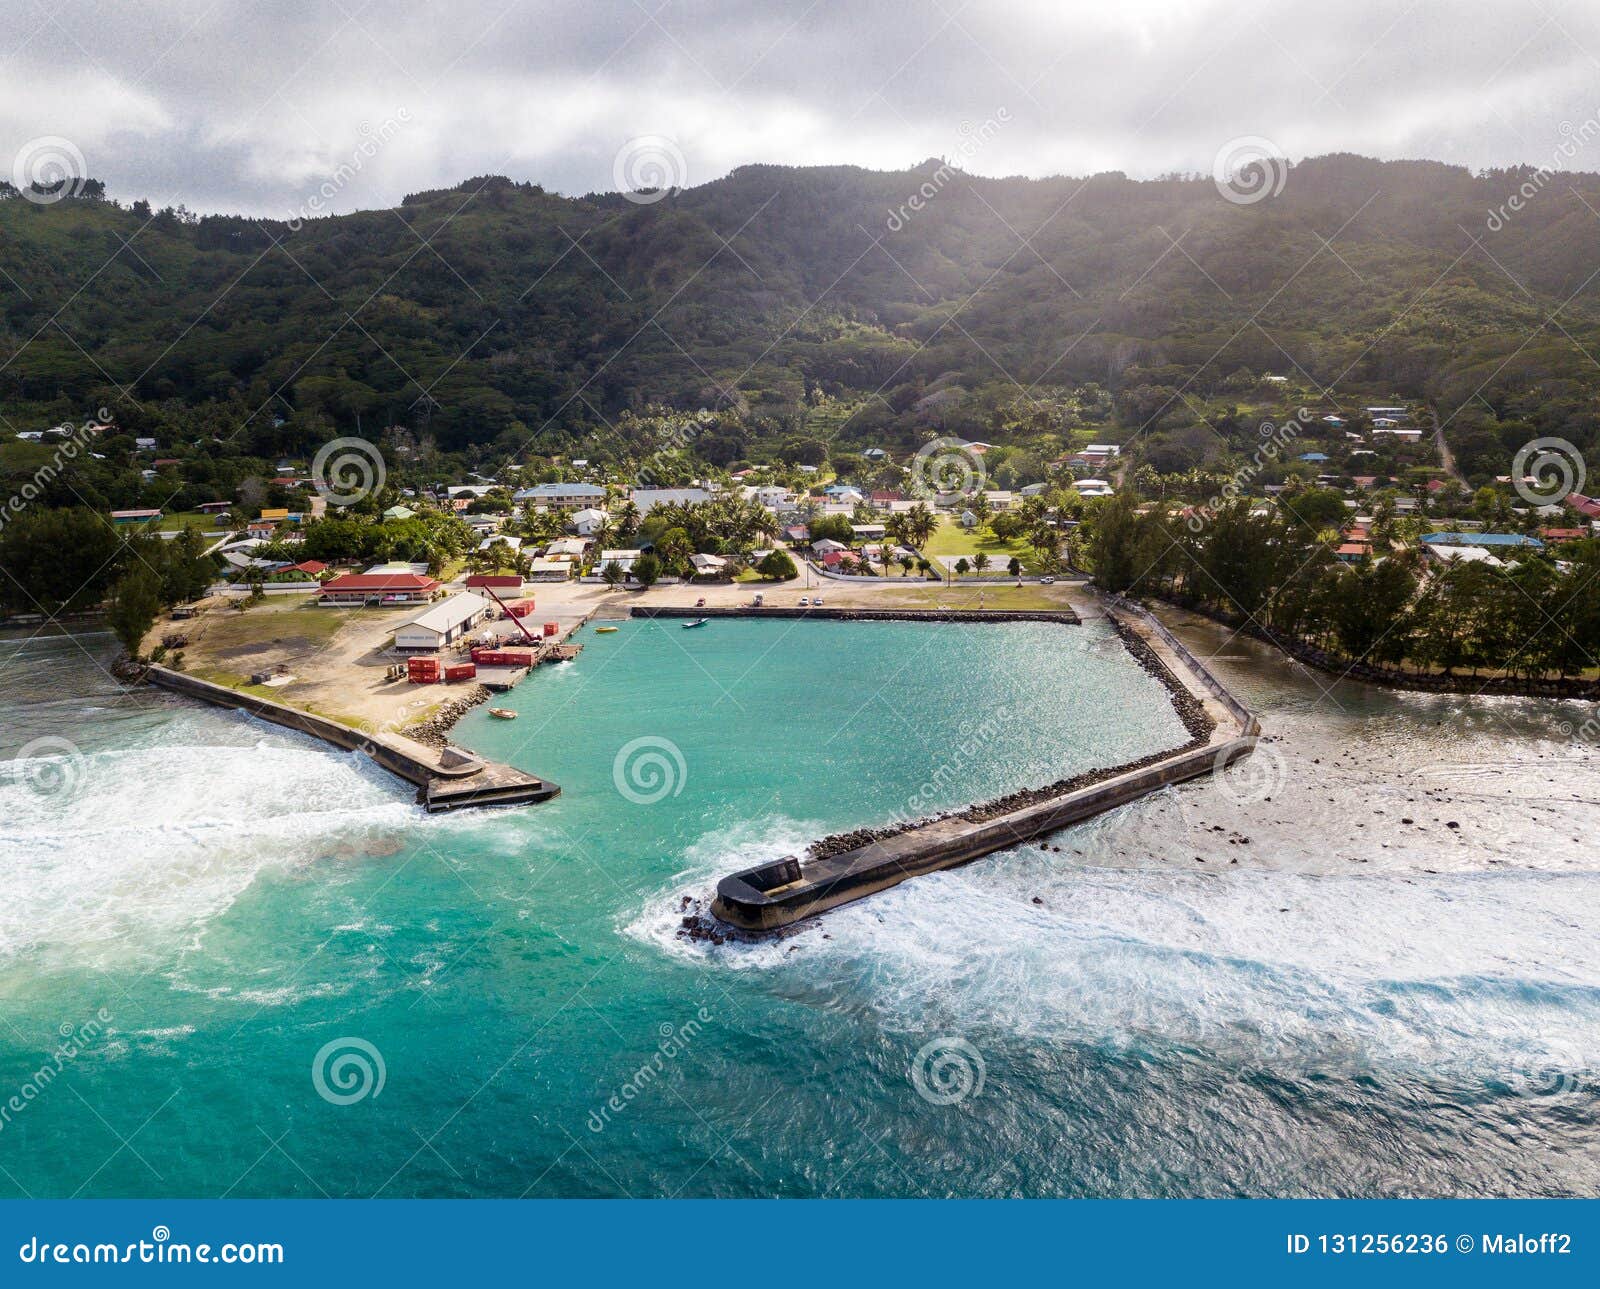 the port and village of moerai, rurutu island, austral islands tubuai islands, french polynesia. aerial view.